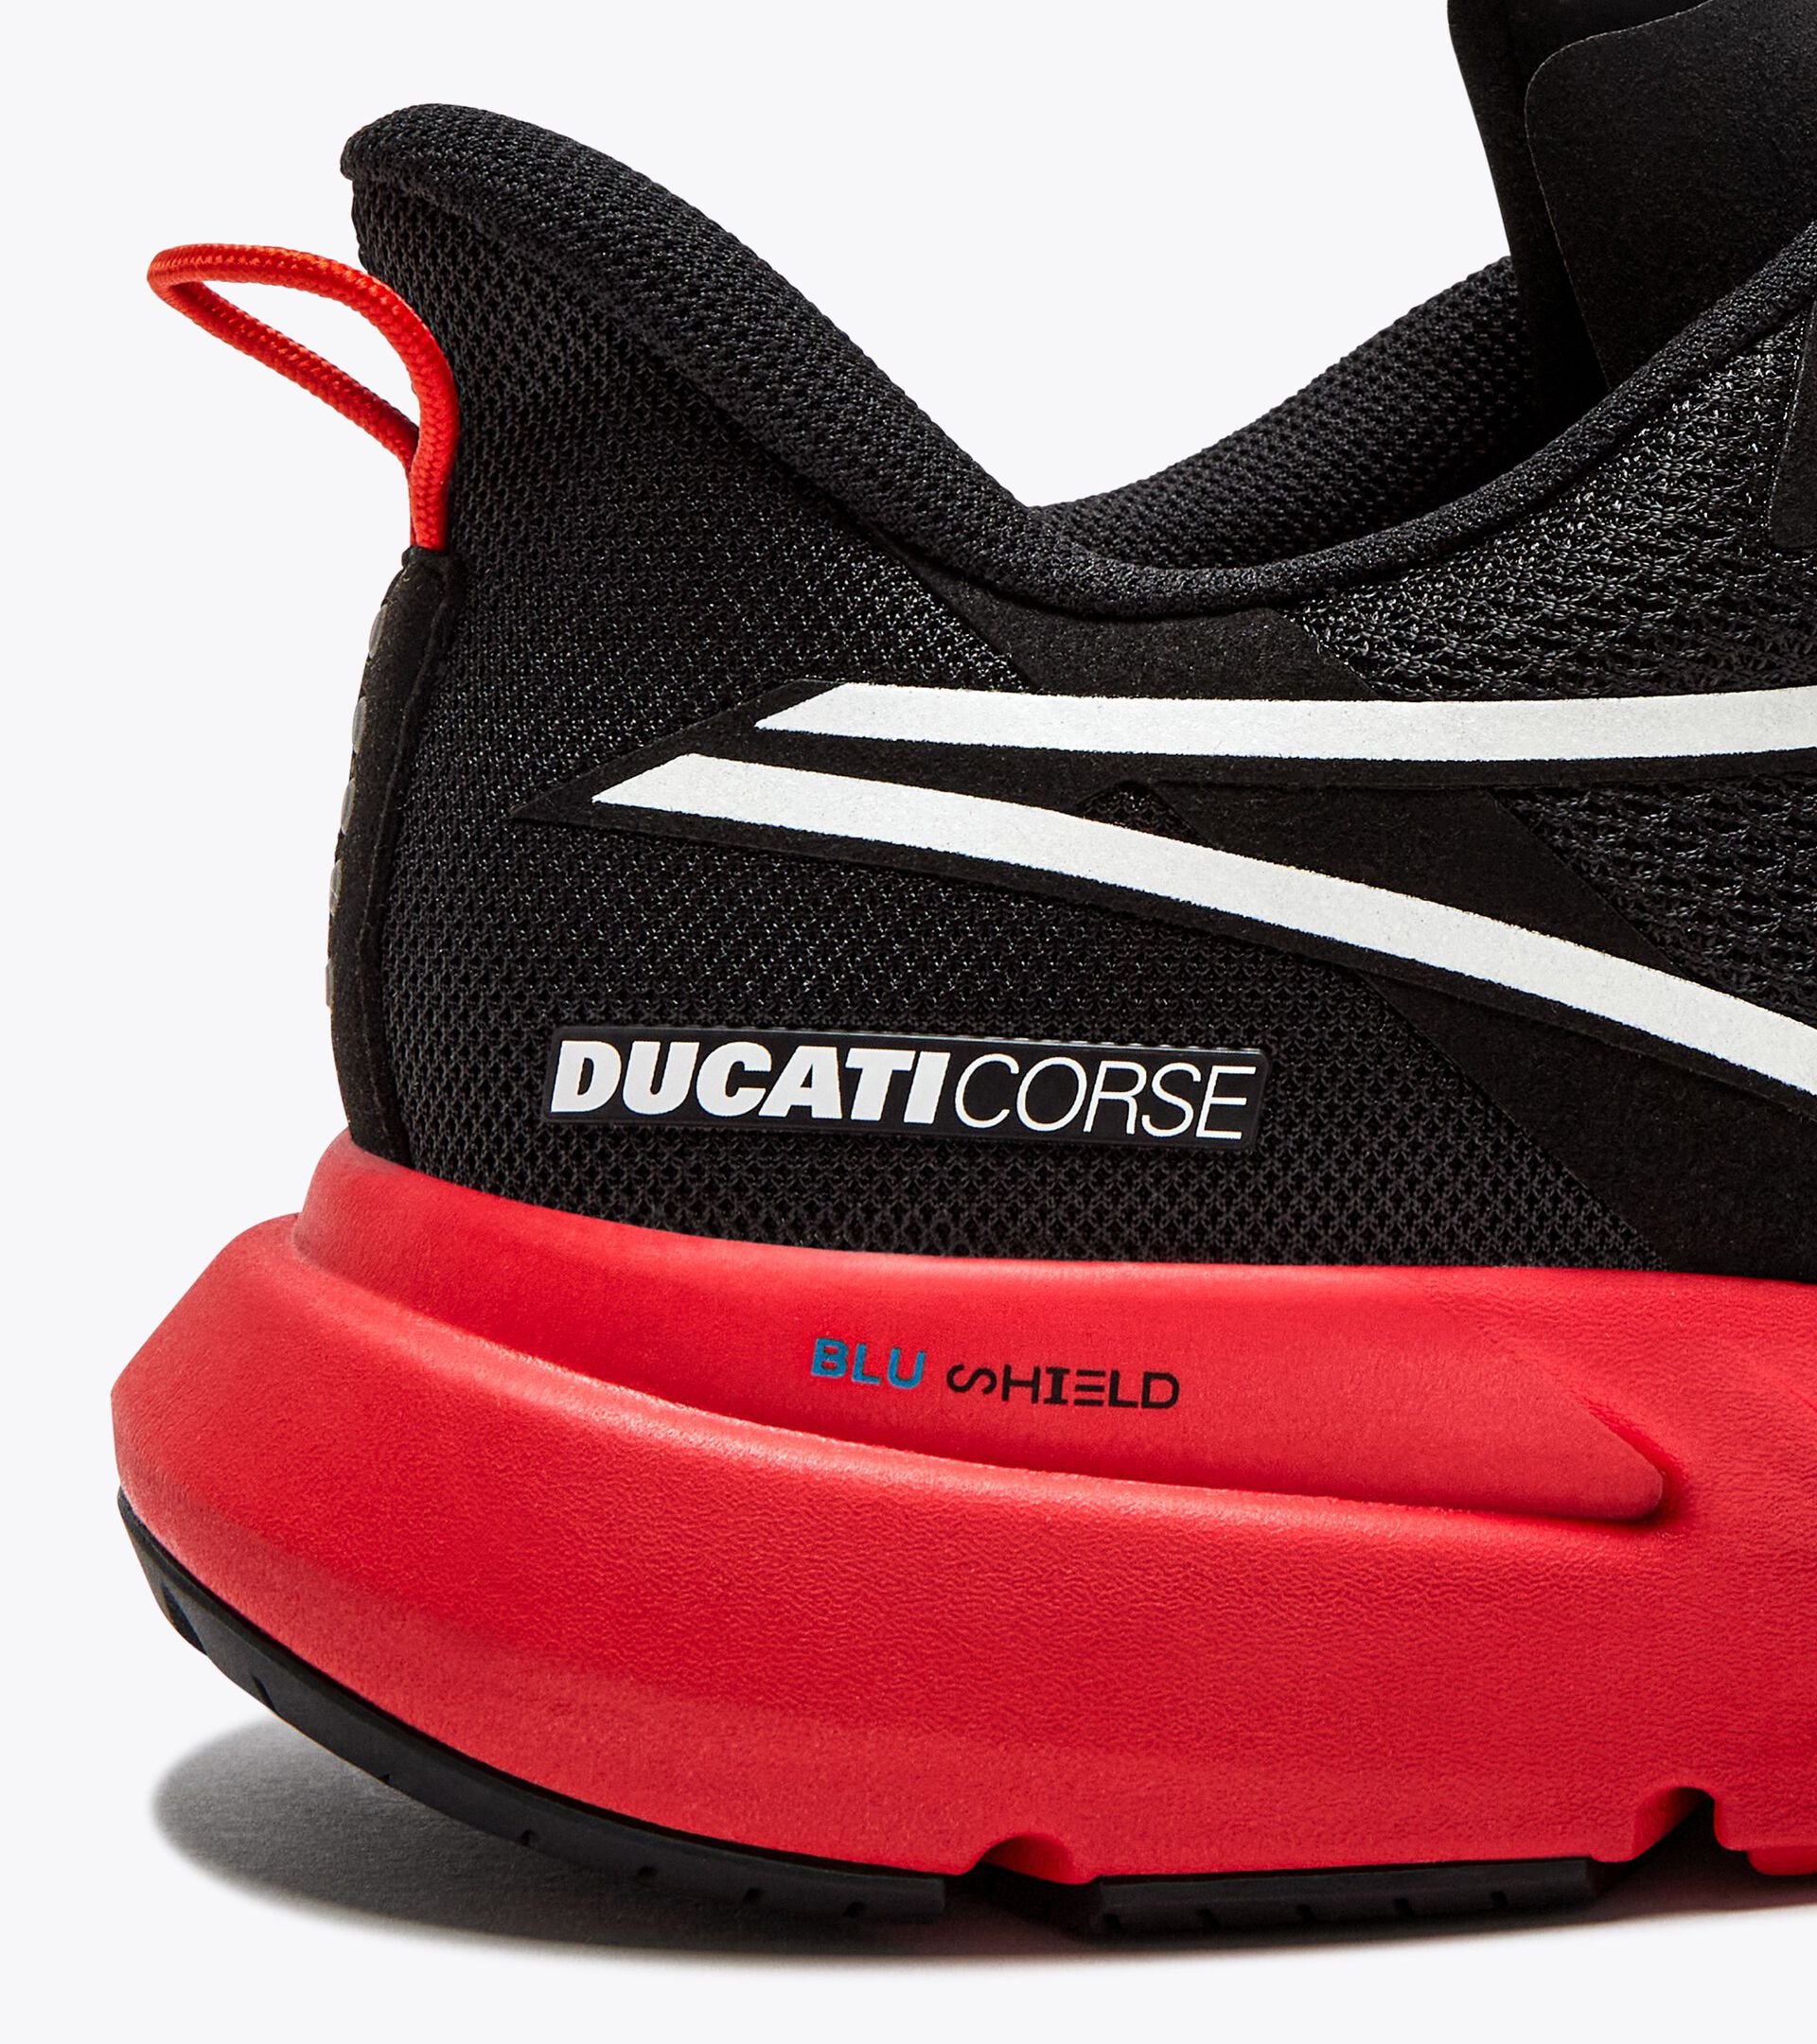 diadora X Ducati Corse running shoe - Men’s  DUCATI VELOCE 4 BLACK/DUCATI MGP RED/BLACK - Diadora